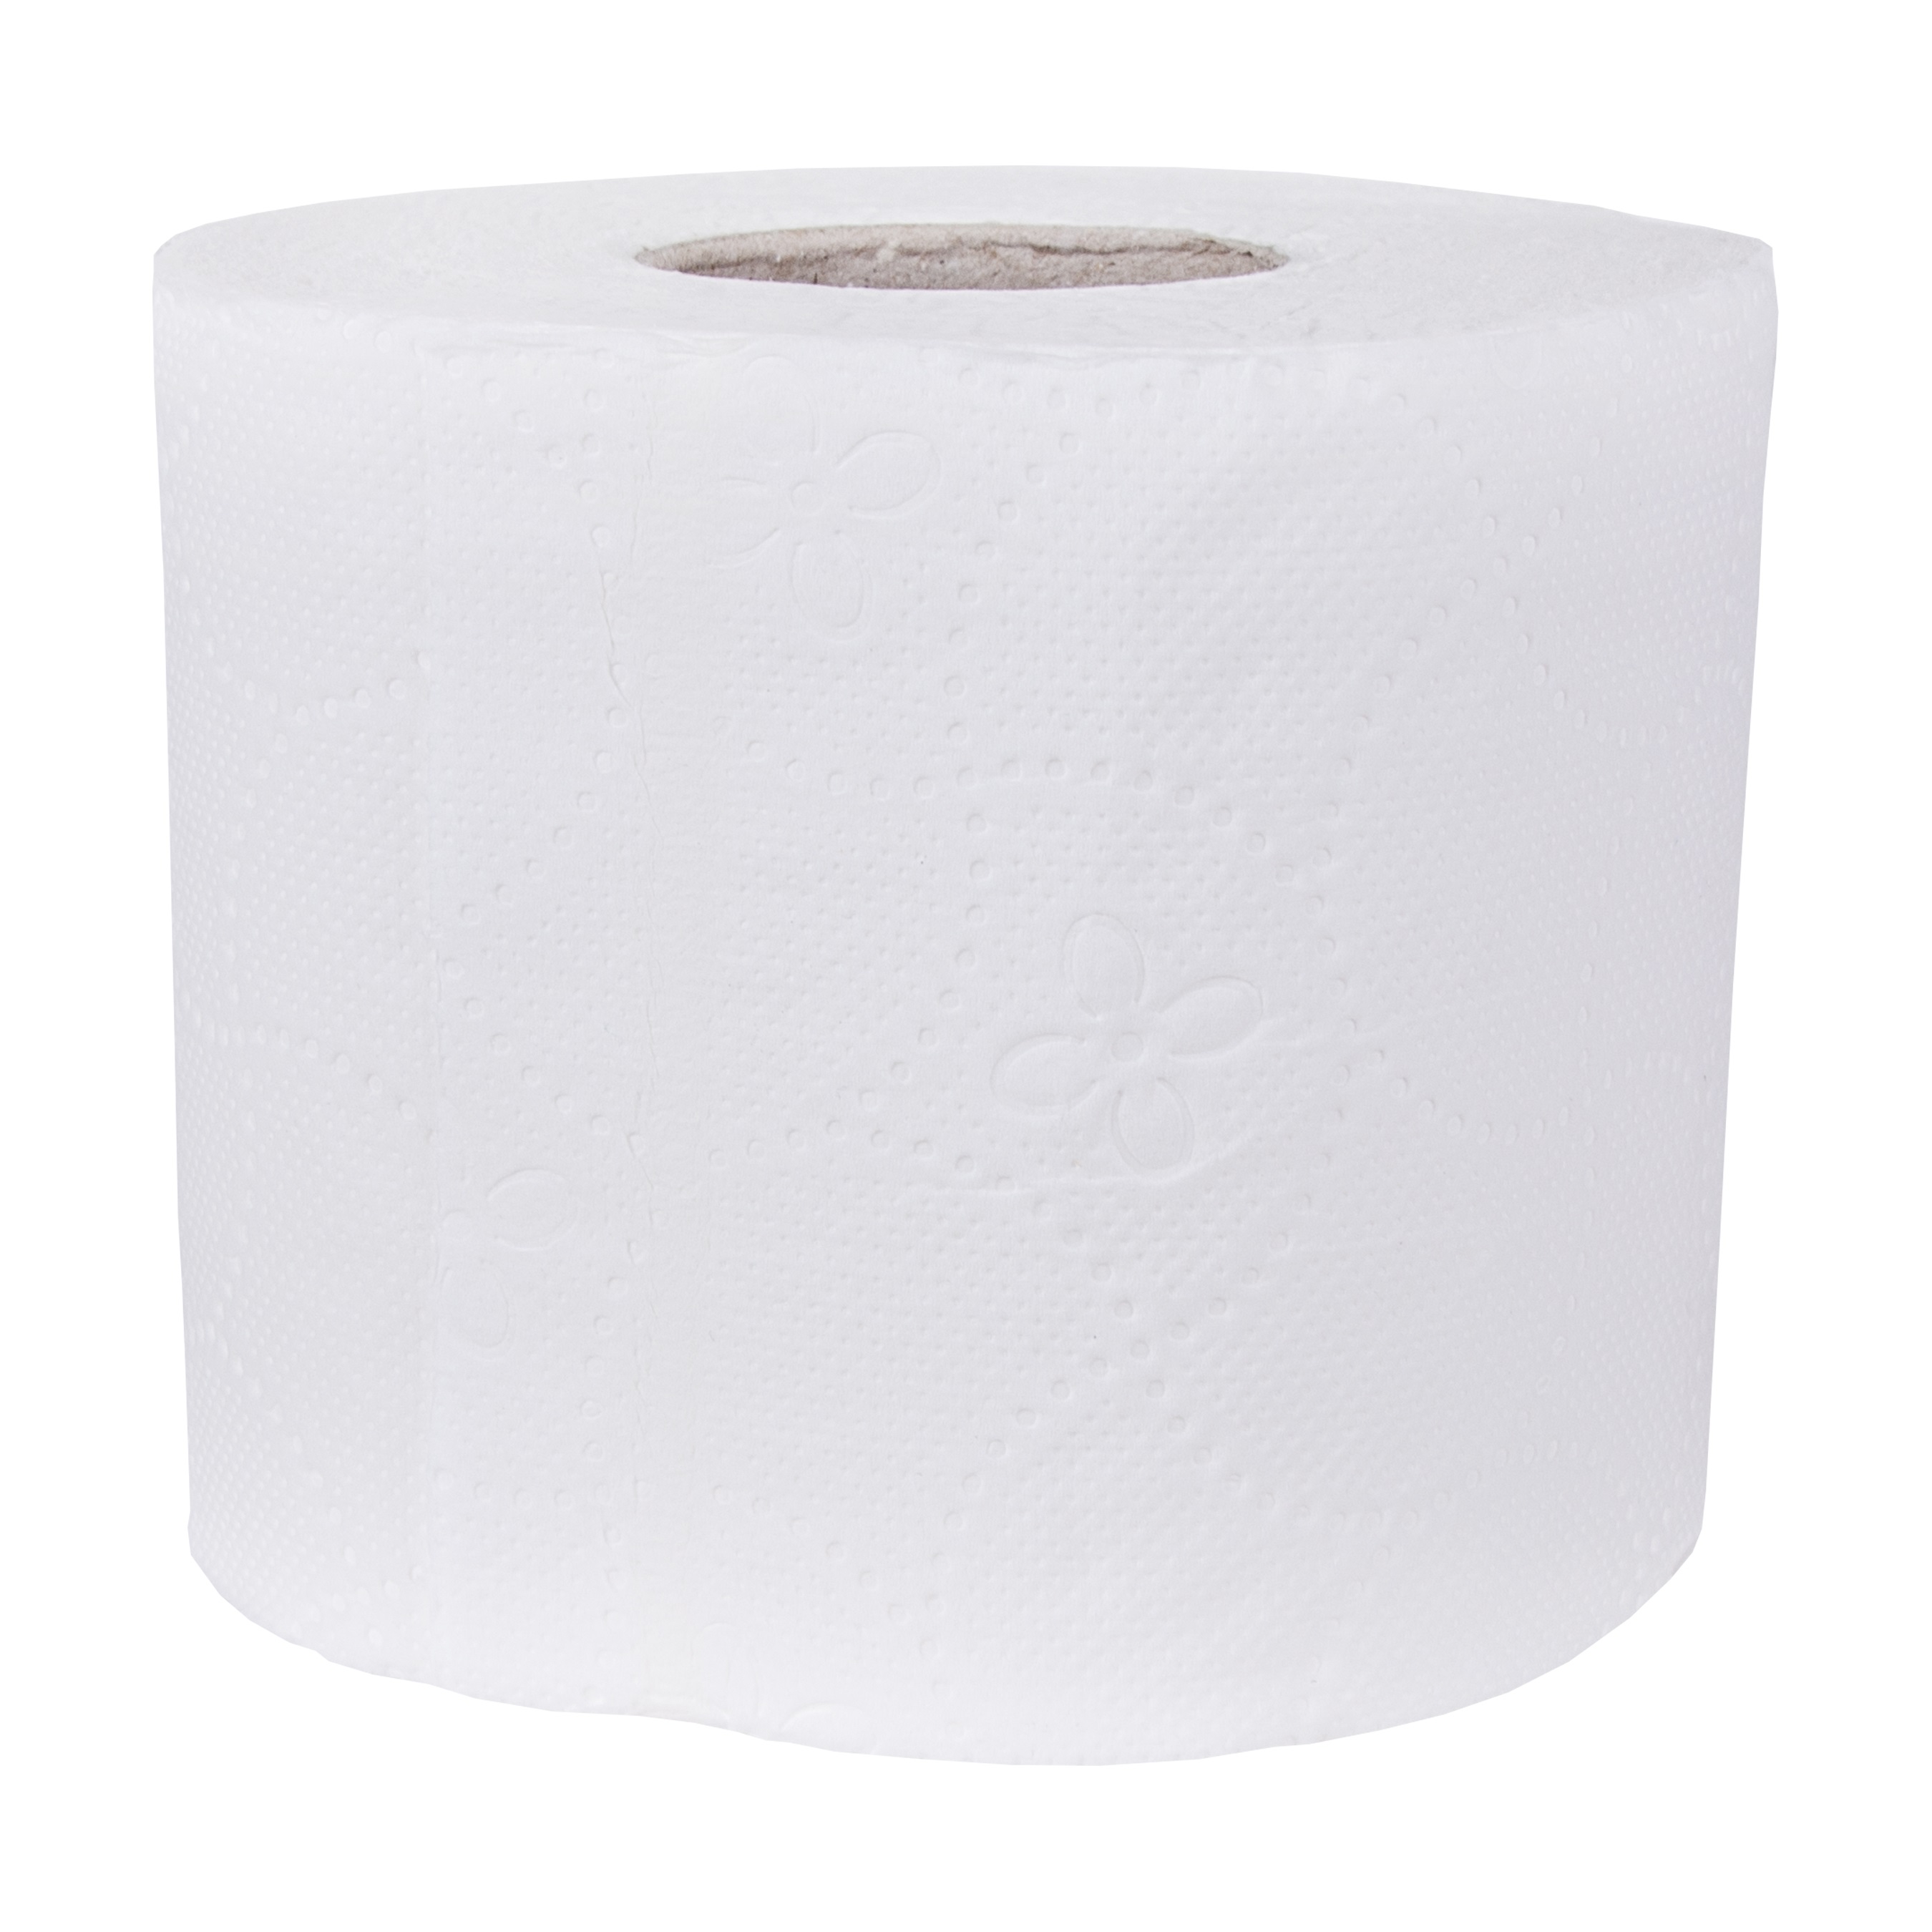 Toiletpapier 2 laags, 400 vel - colli á 40 rol